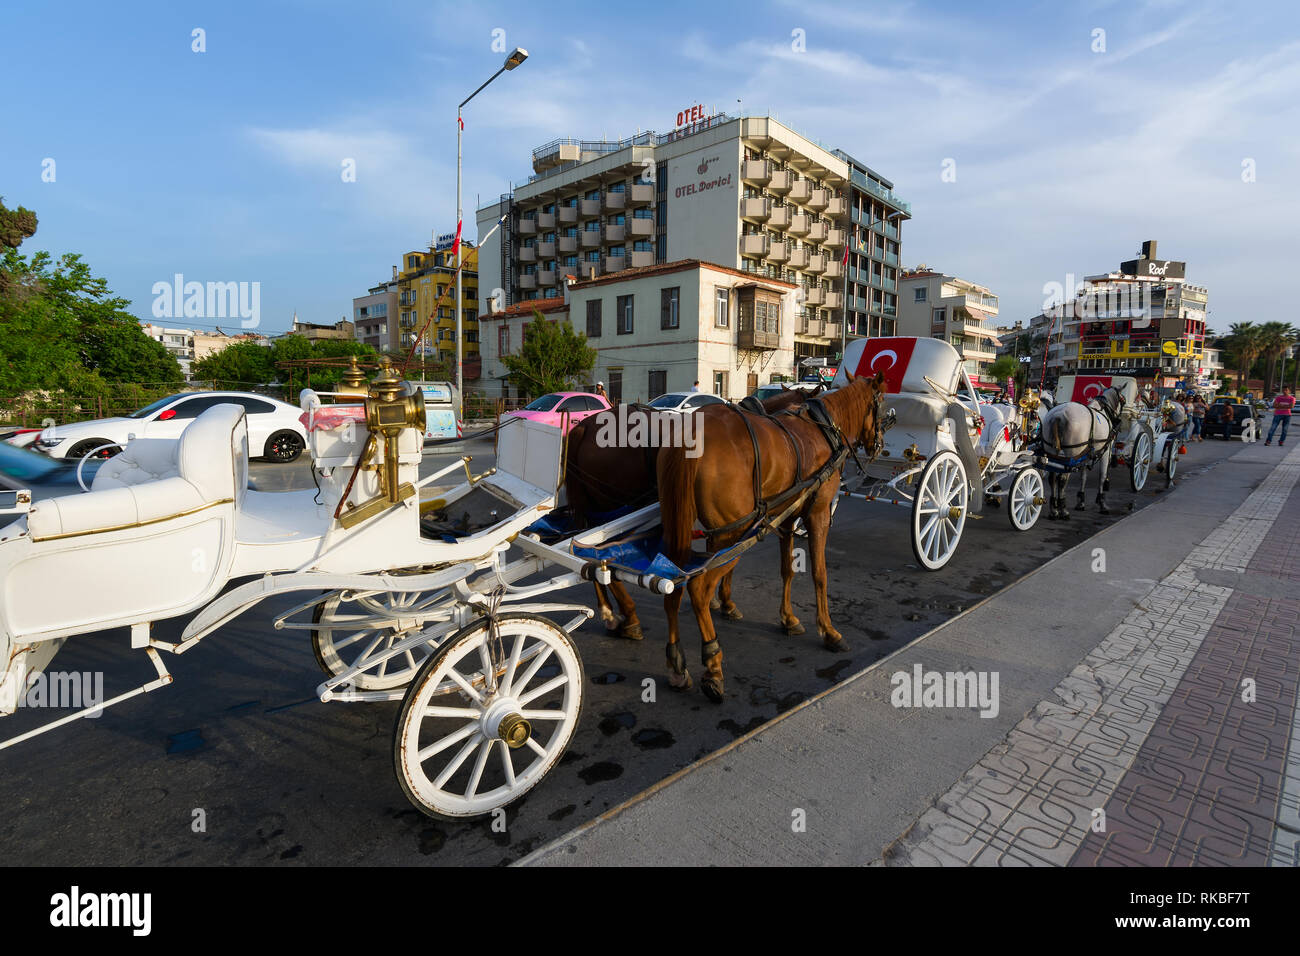 KUSADASI, TURKEY - MAY 23, 2015: Horse carriage on the street of Kusadasi, Turkey. Stock Photo